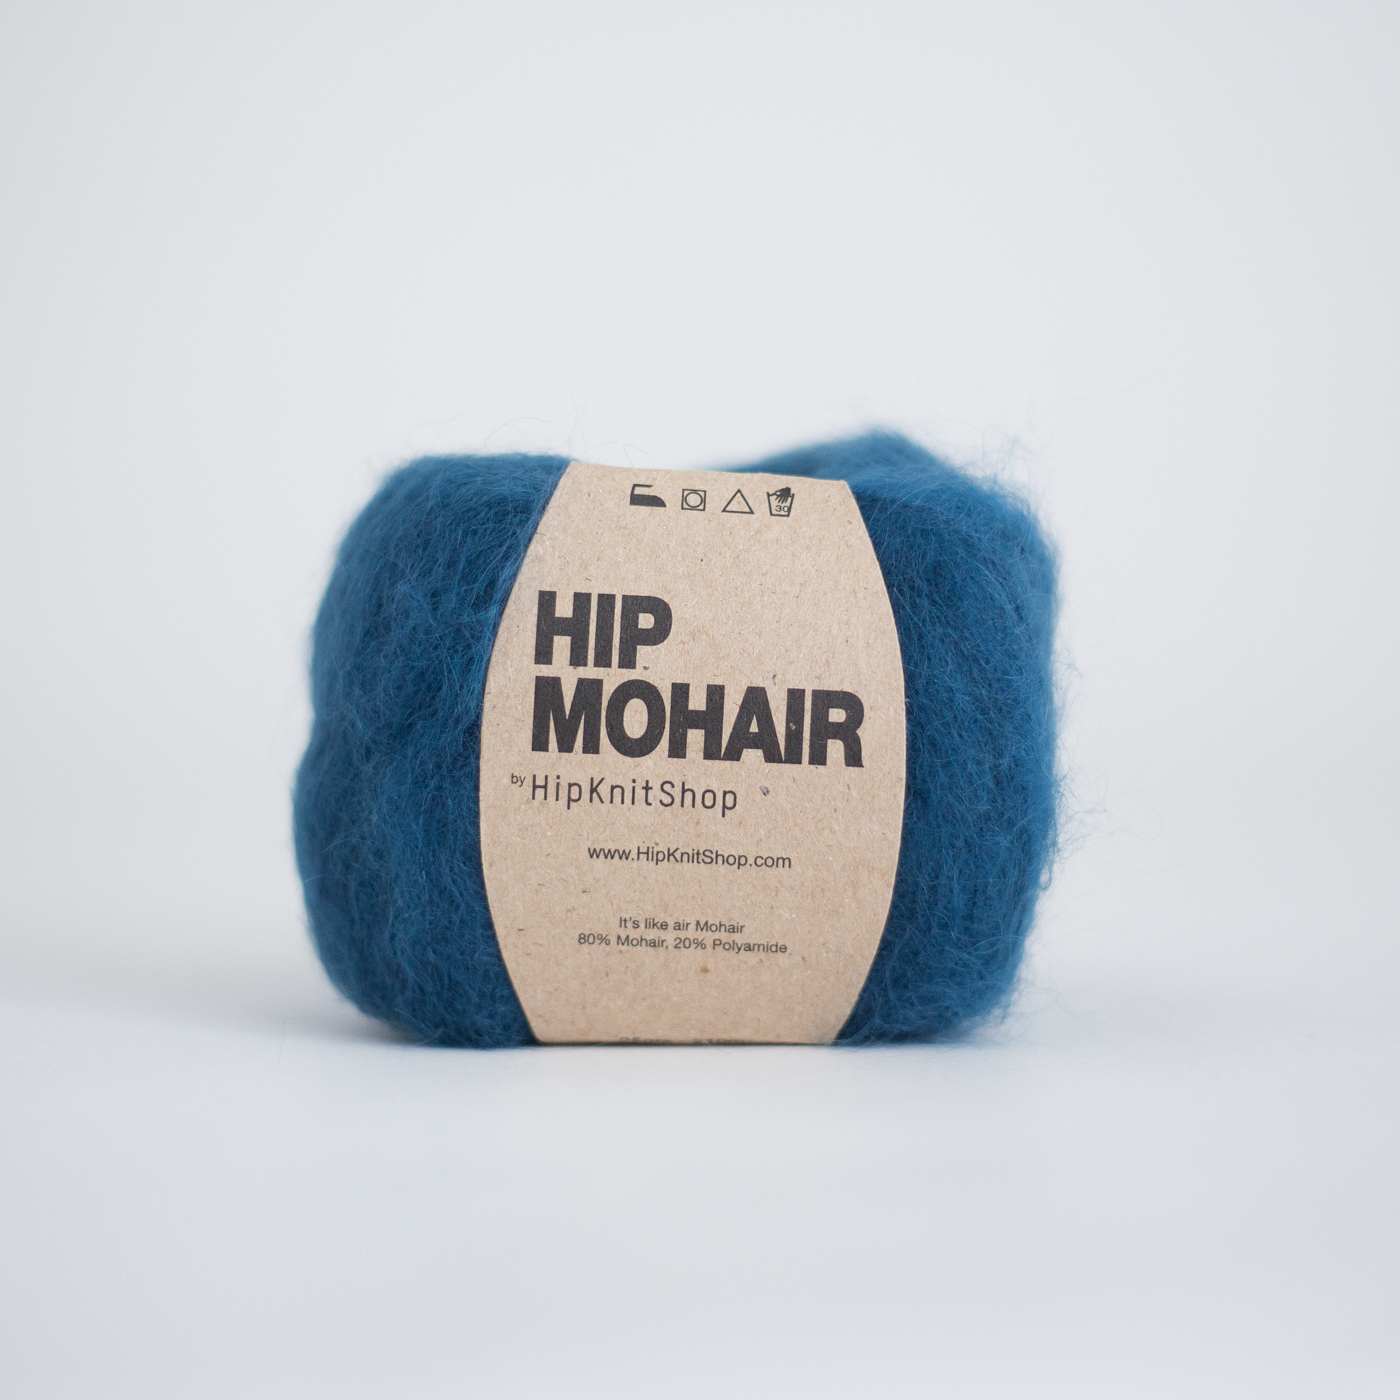  - Petrol blue Mohair | Hip Mohair Yarn - by HipKnitShop - 01/06/2018